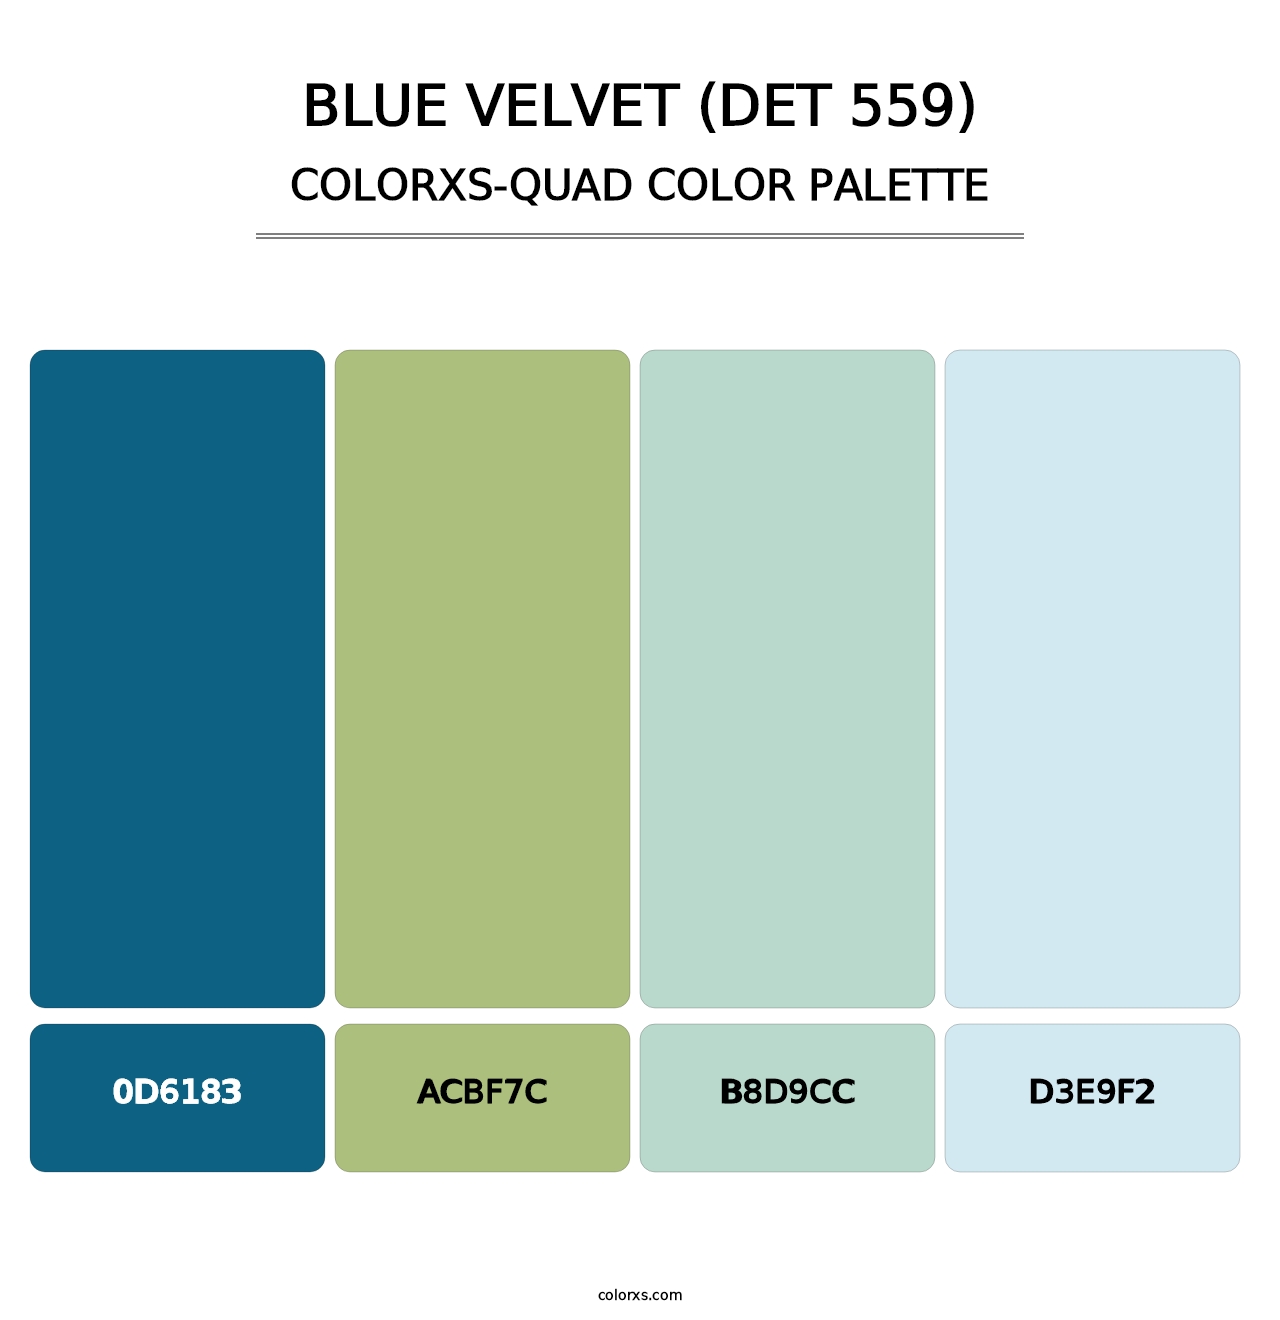 Blue Velvet (DET 559) - Colorxs Quad Palette